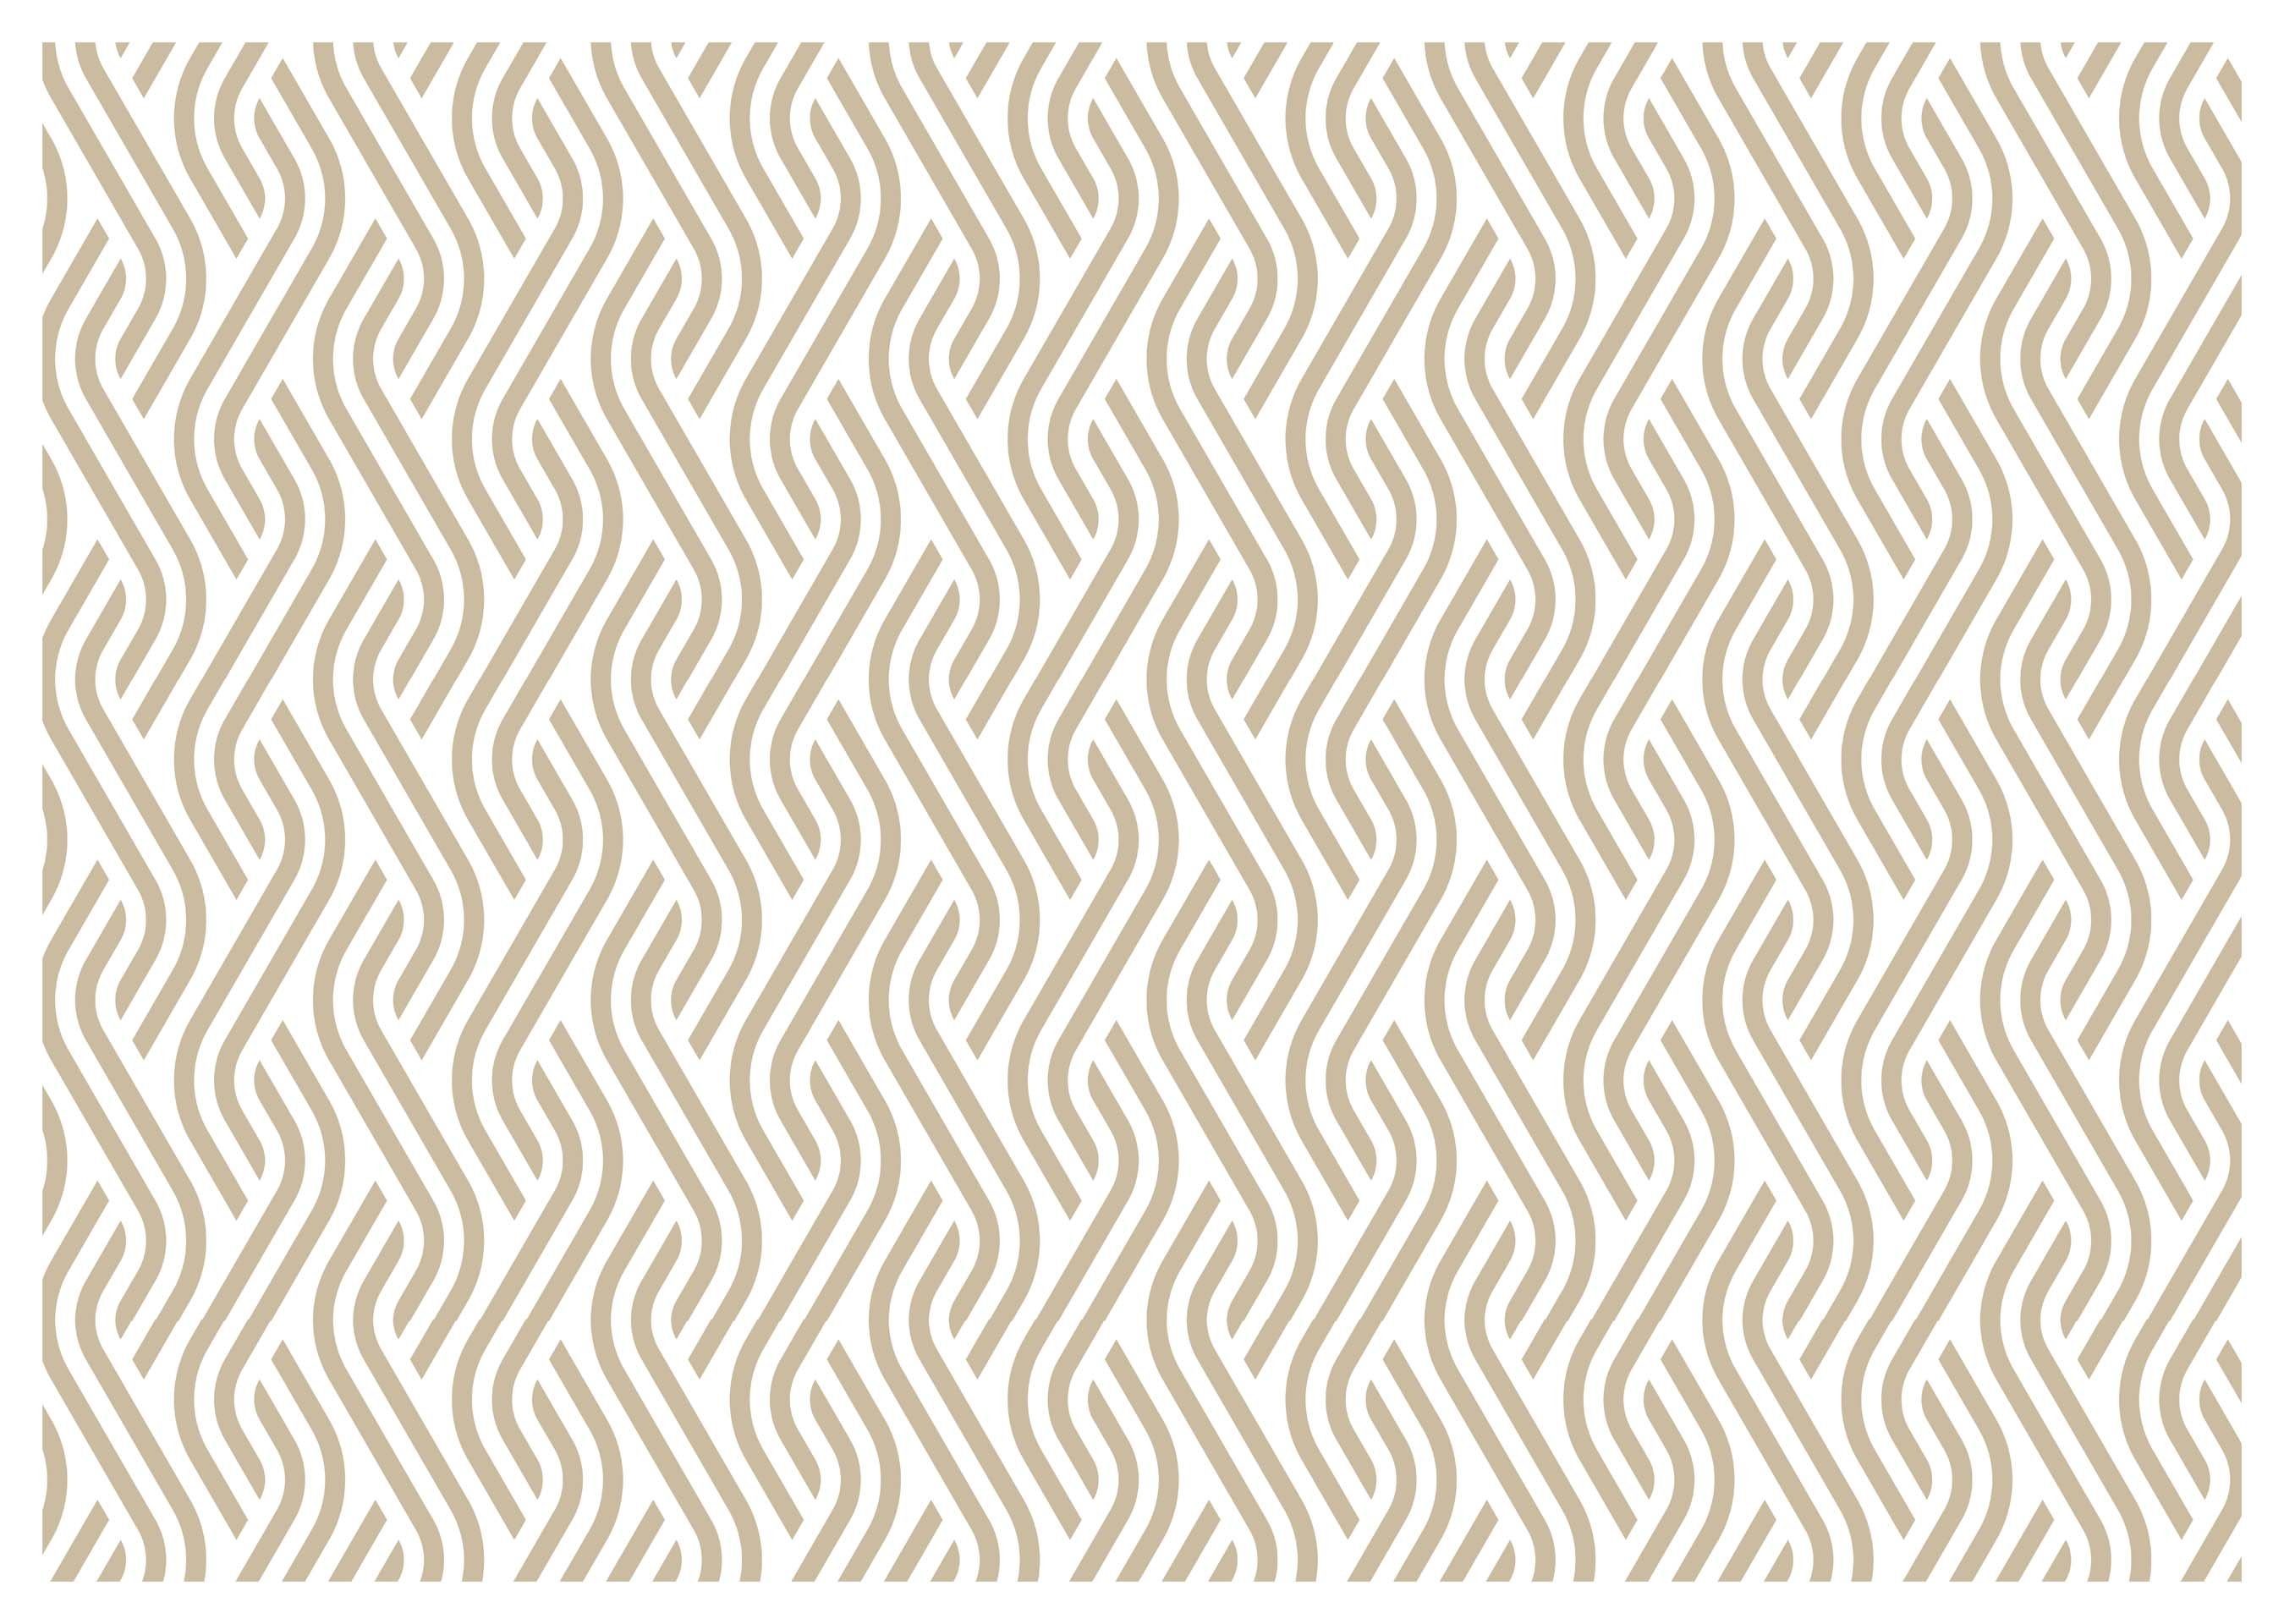 wandmotiv24 Fototapete abstrakt Linien minimalistisch, strukturiert, Wandtapete, Motivtapete, matt, Vinyltapete, selbstklebend